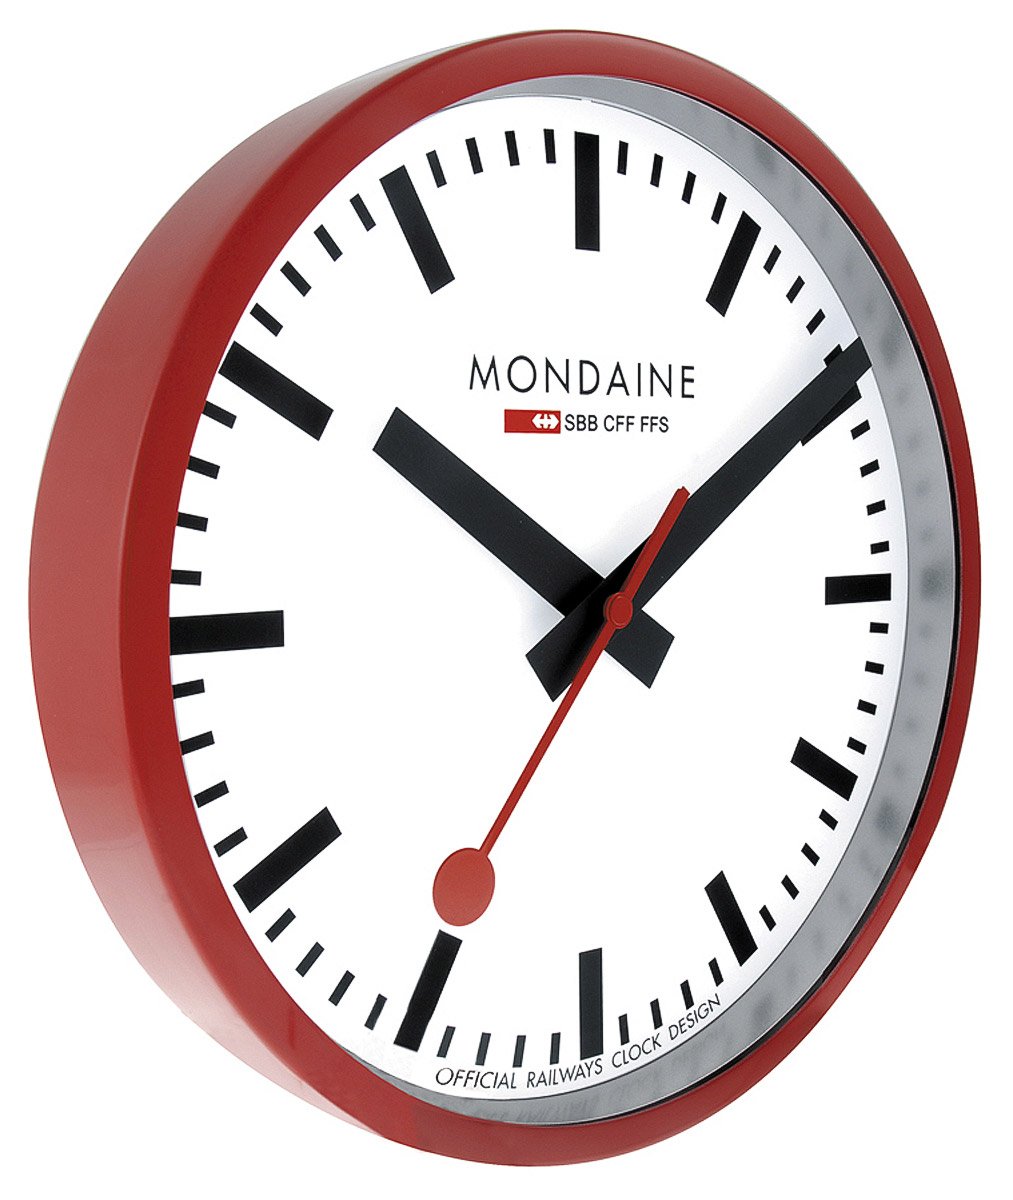 Horloge Mondaine Mini Clock CFF A997.MCAL.16SBB.1